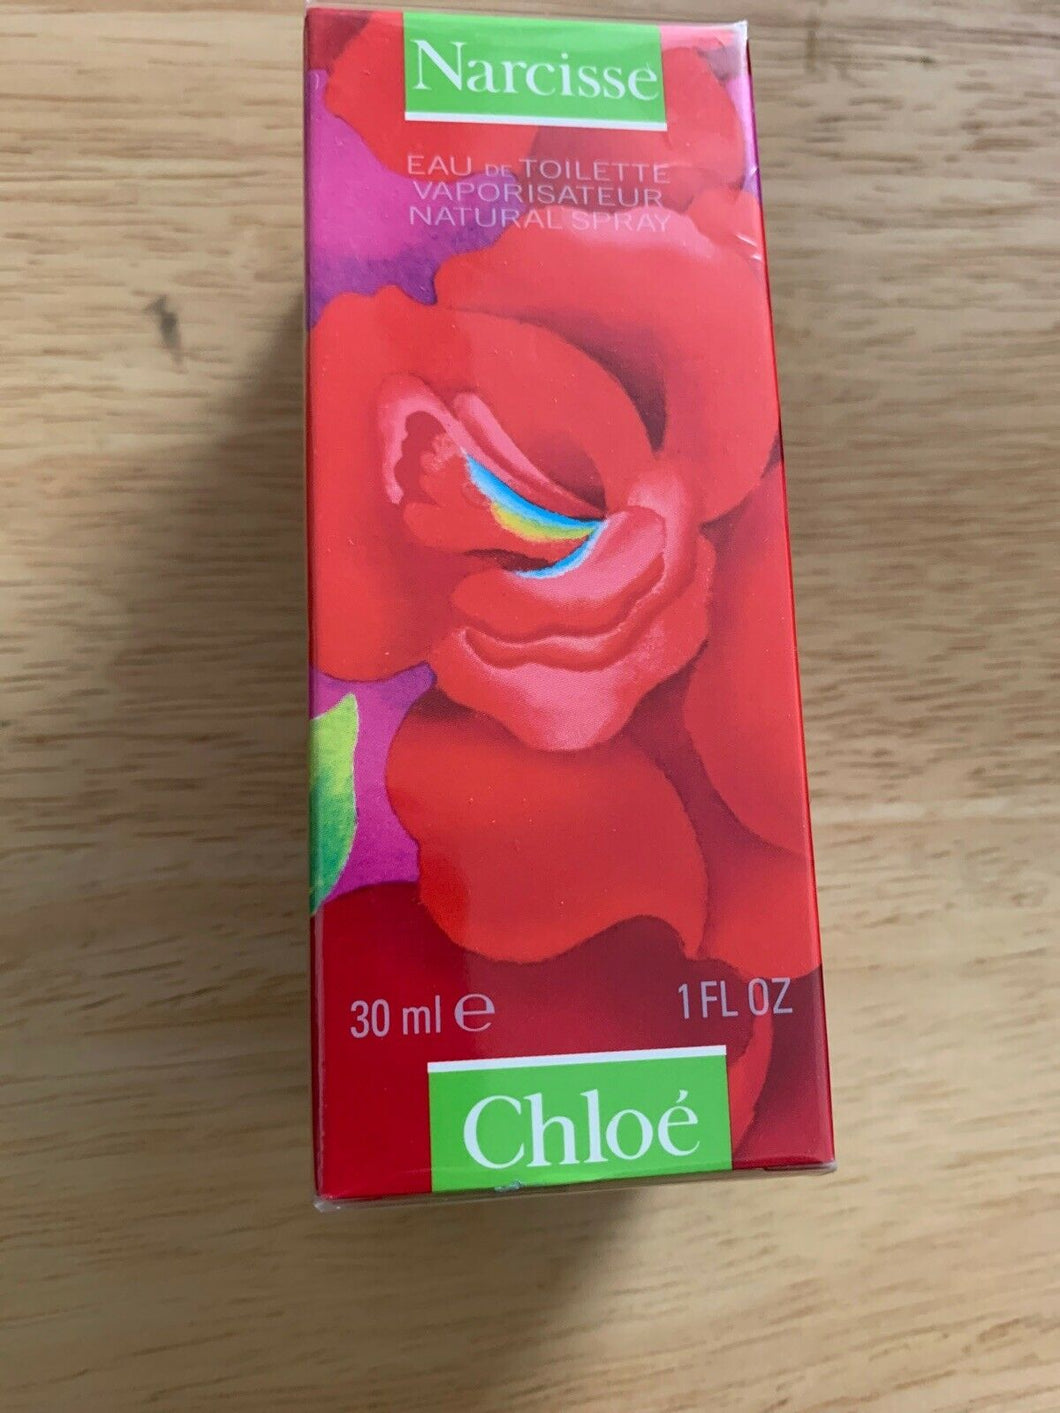 CHLOE NARCISSE by Karl Lagerfeld women 1oz 30 ml EDT Perfume * SEALED BOX - Perfume Gallery